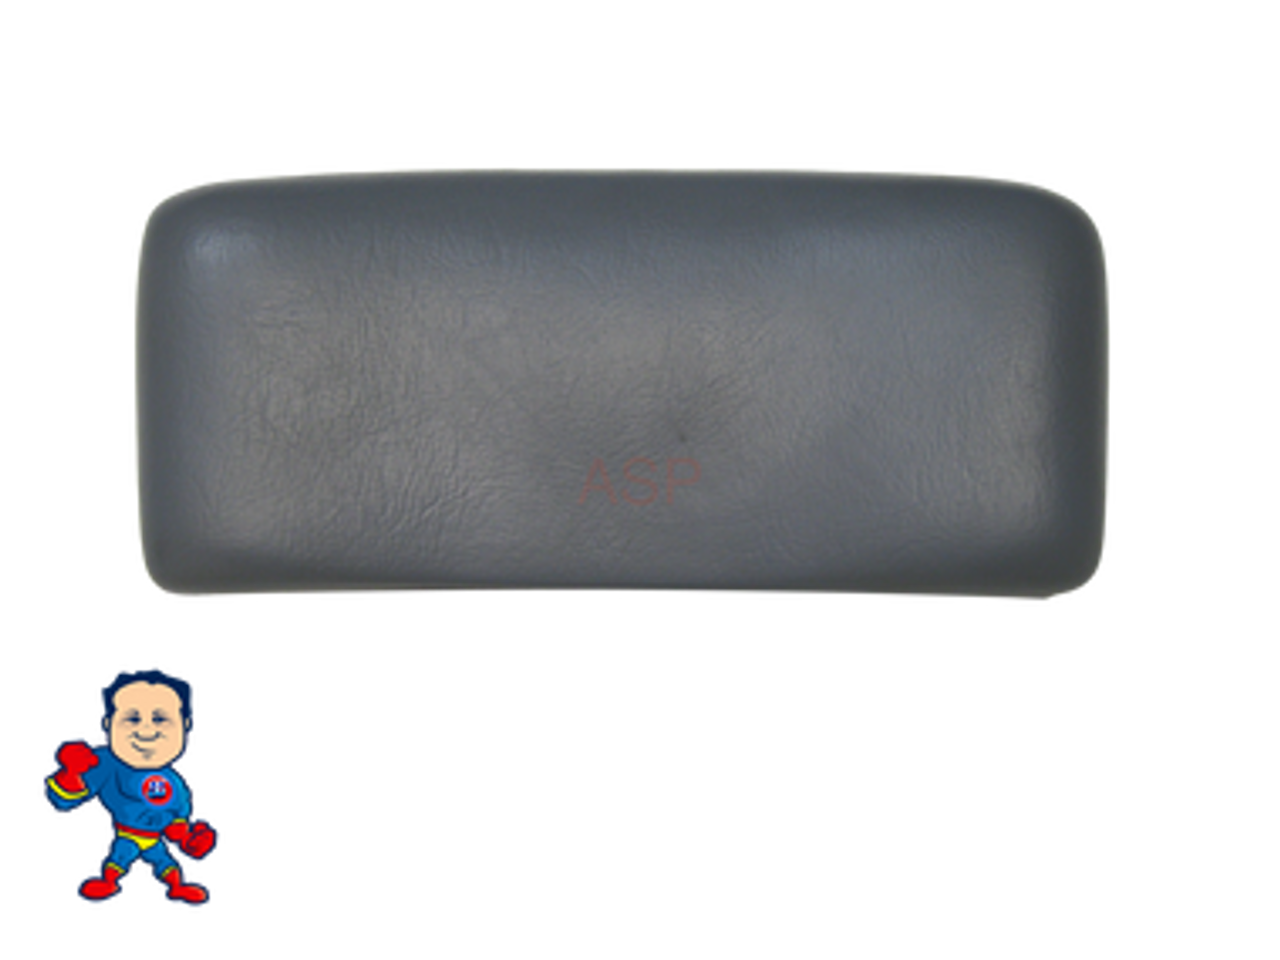 Gray Neck Pillow American Select Bimini Spa Hot Tub 10 1/2" Pillow